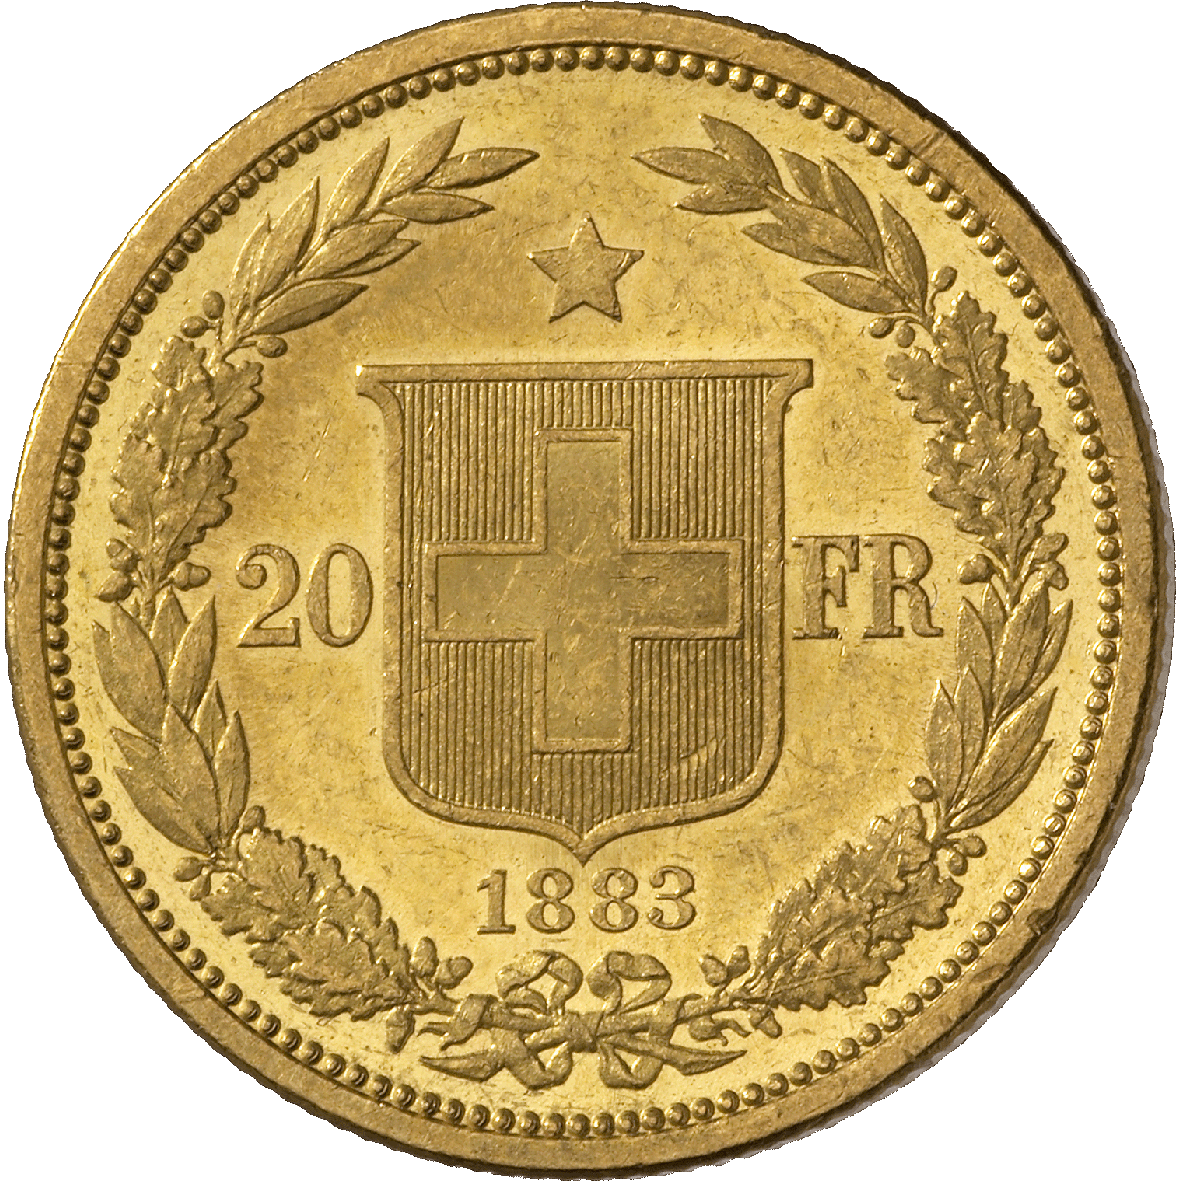 Swiss Confederation, 20 Francs 1883 (reverse)